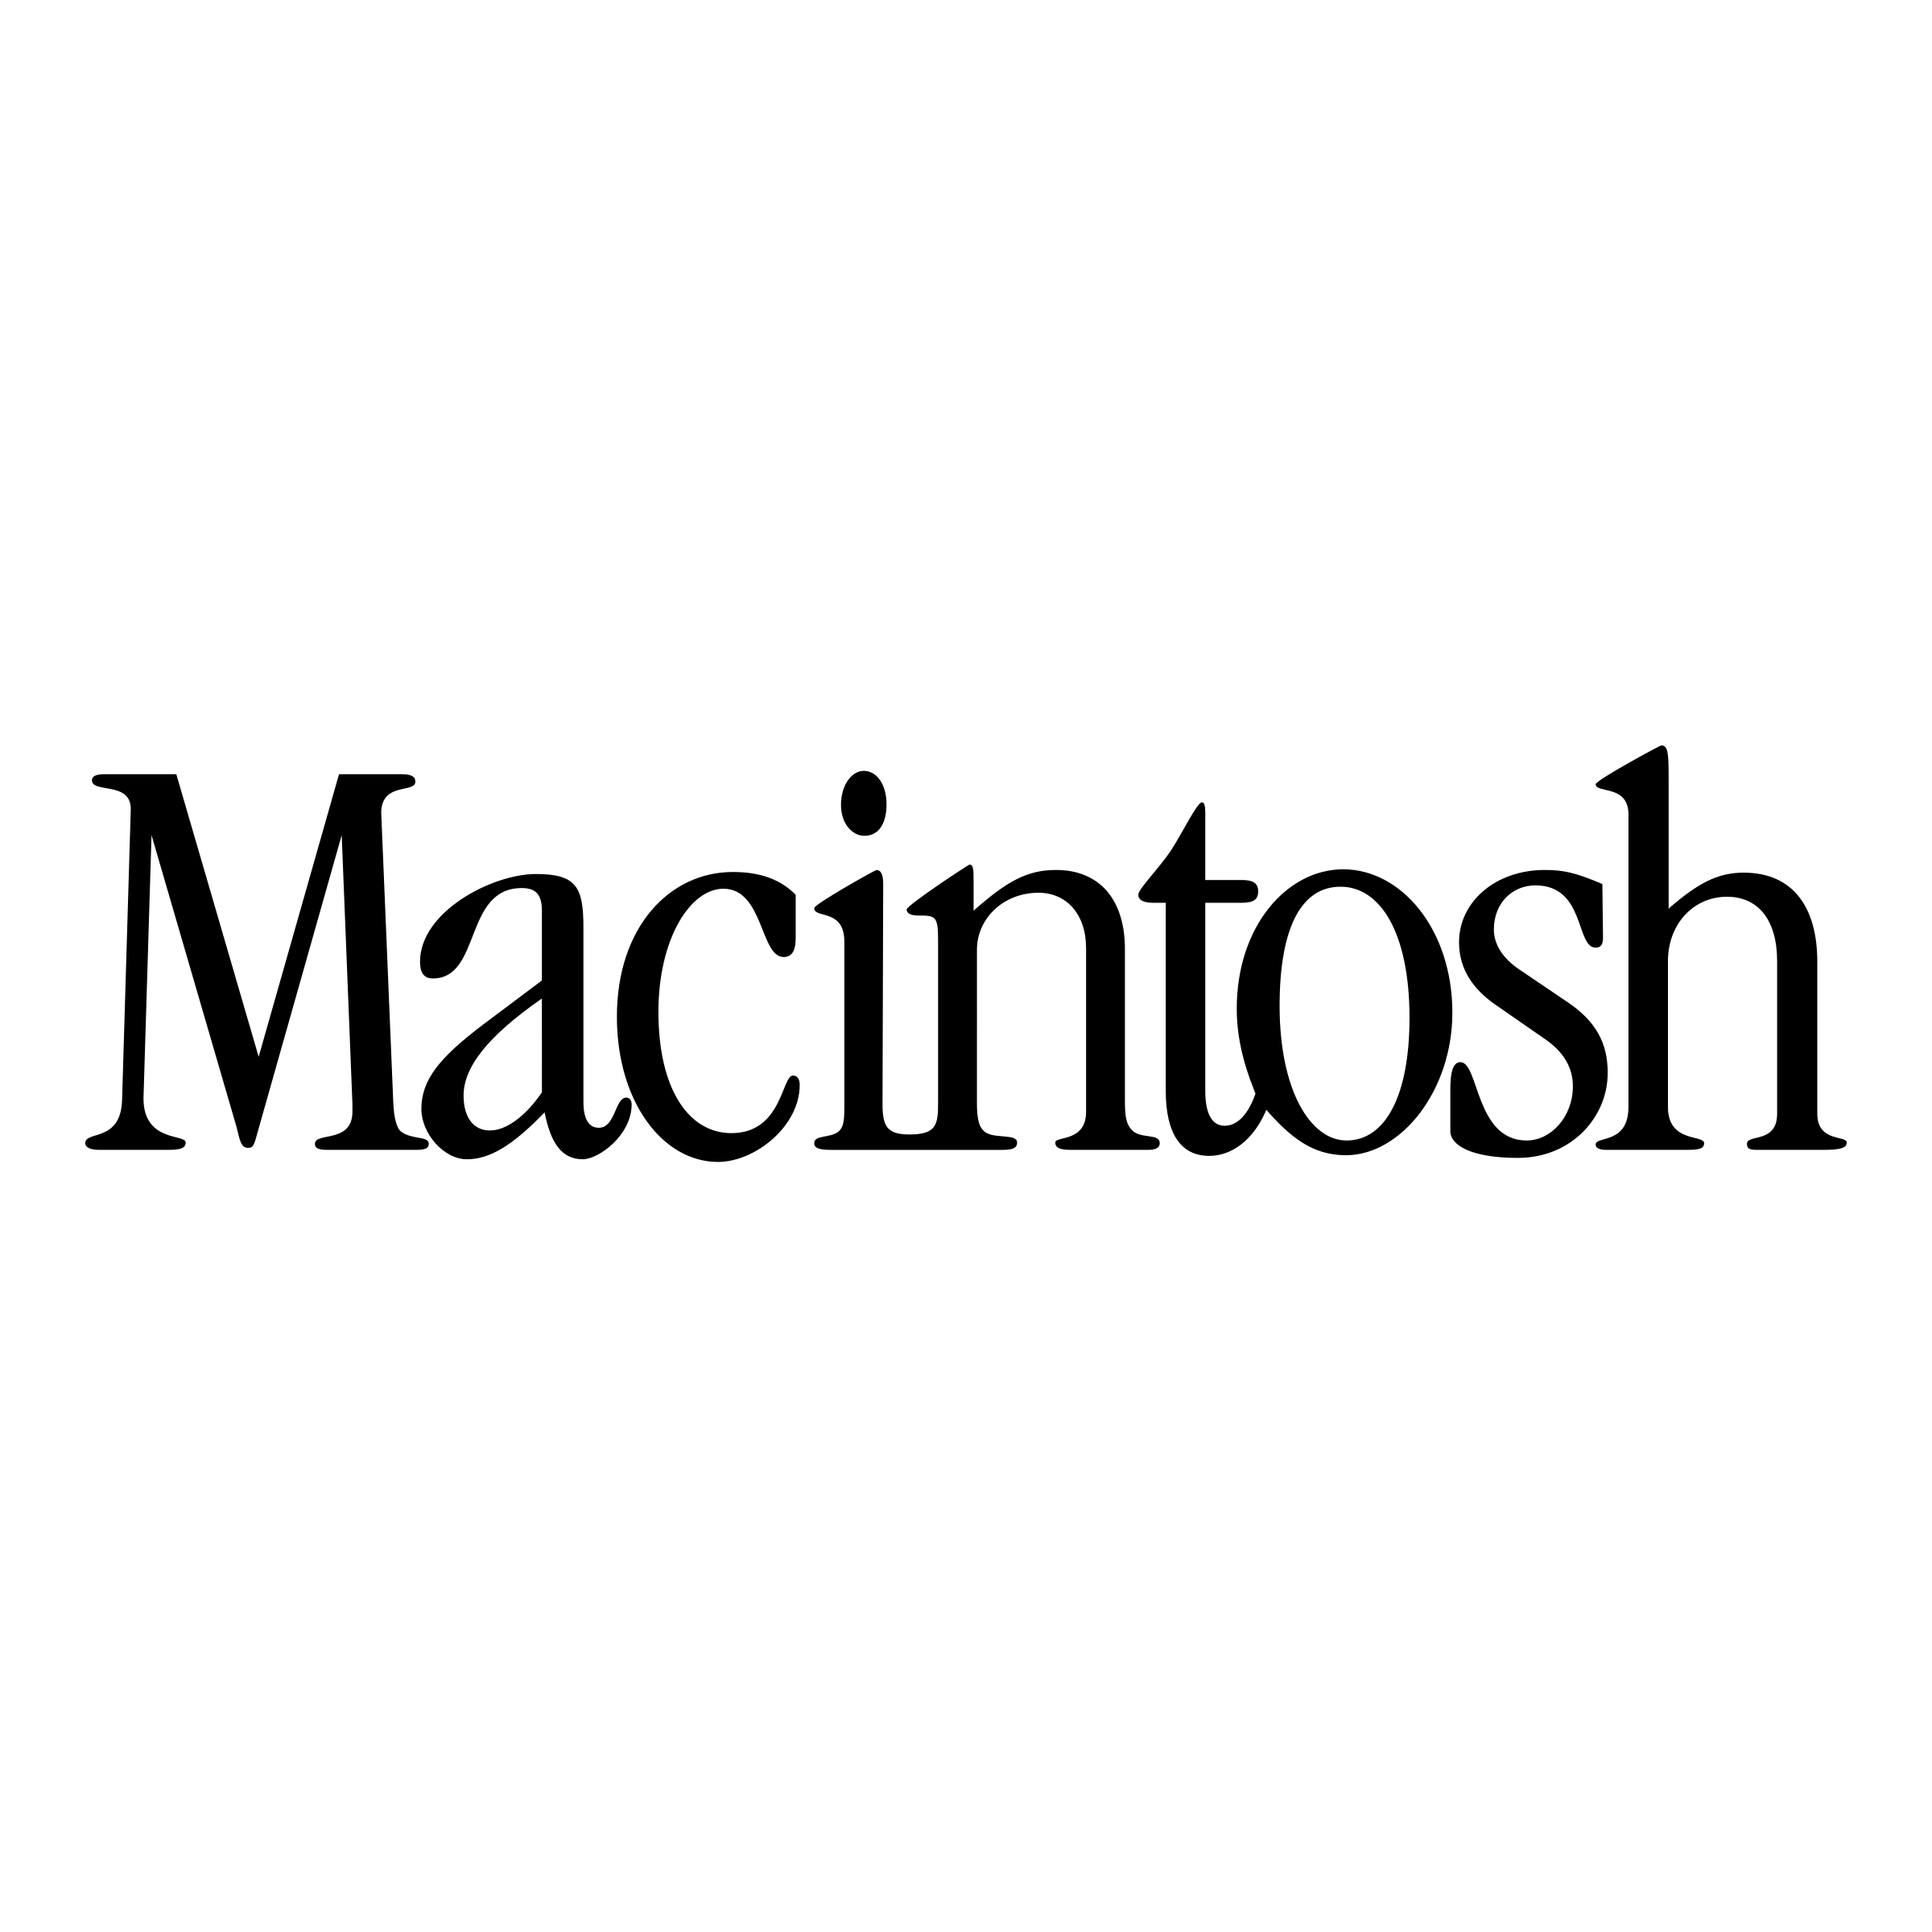 Macintosh Logo - Macintosh Logo PNG Transparent & SVG Vector - Freebie Supply